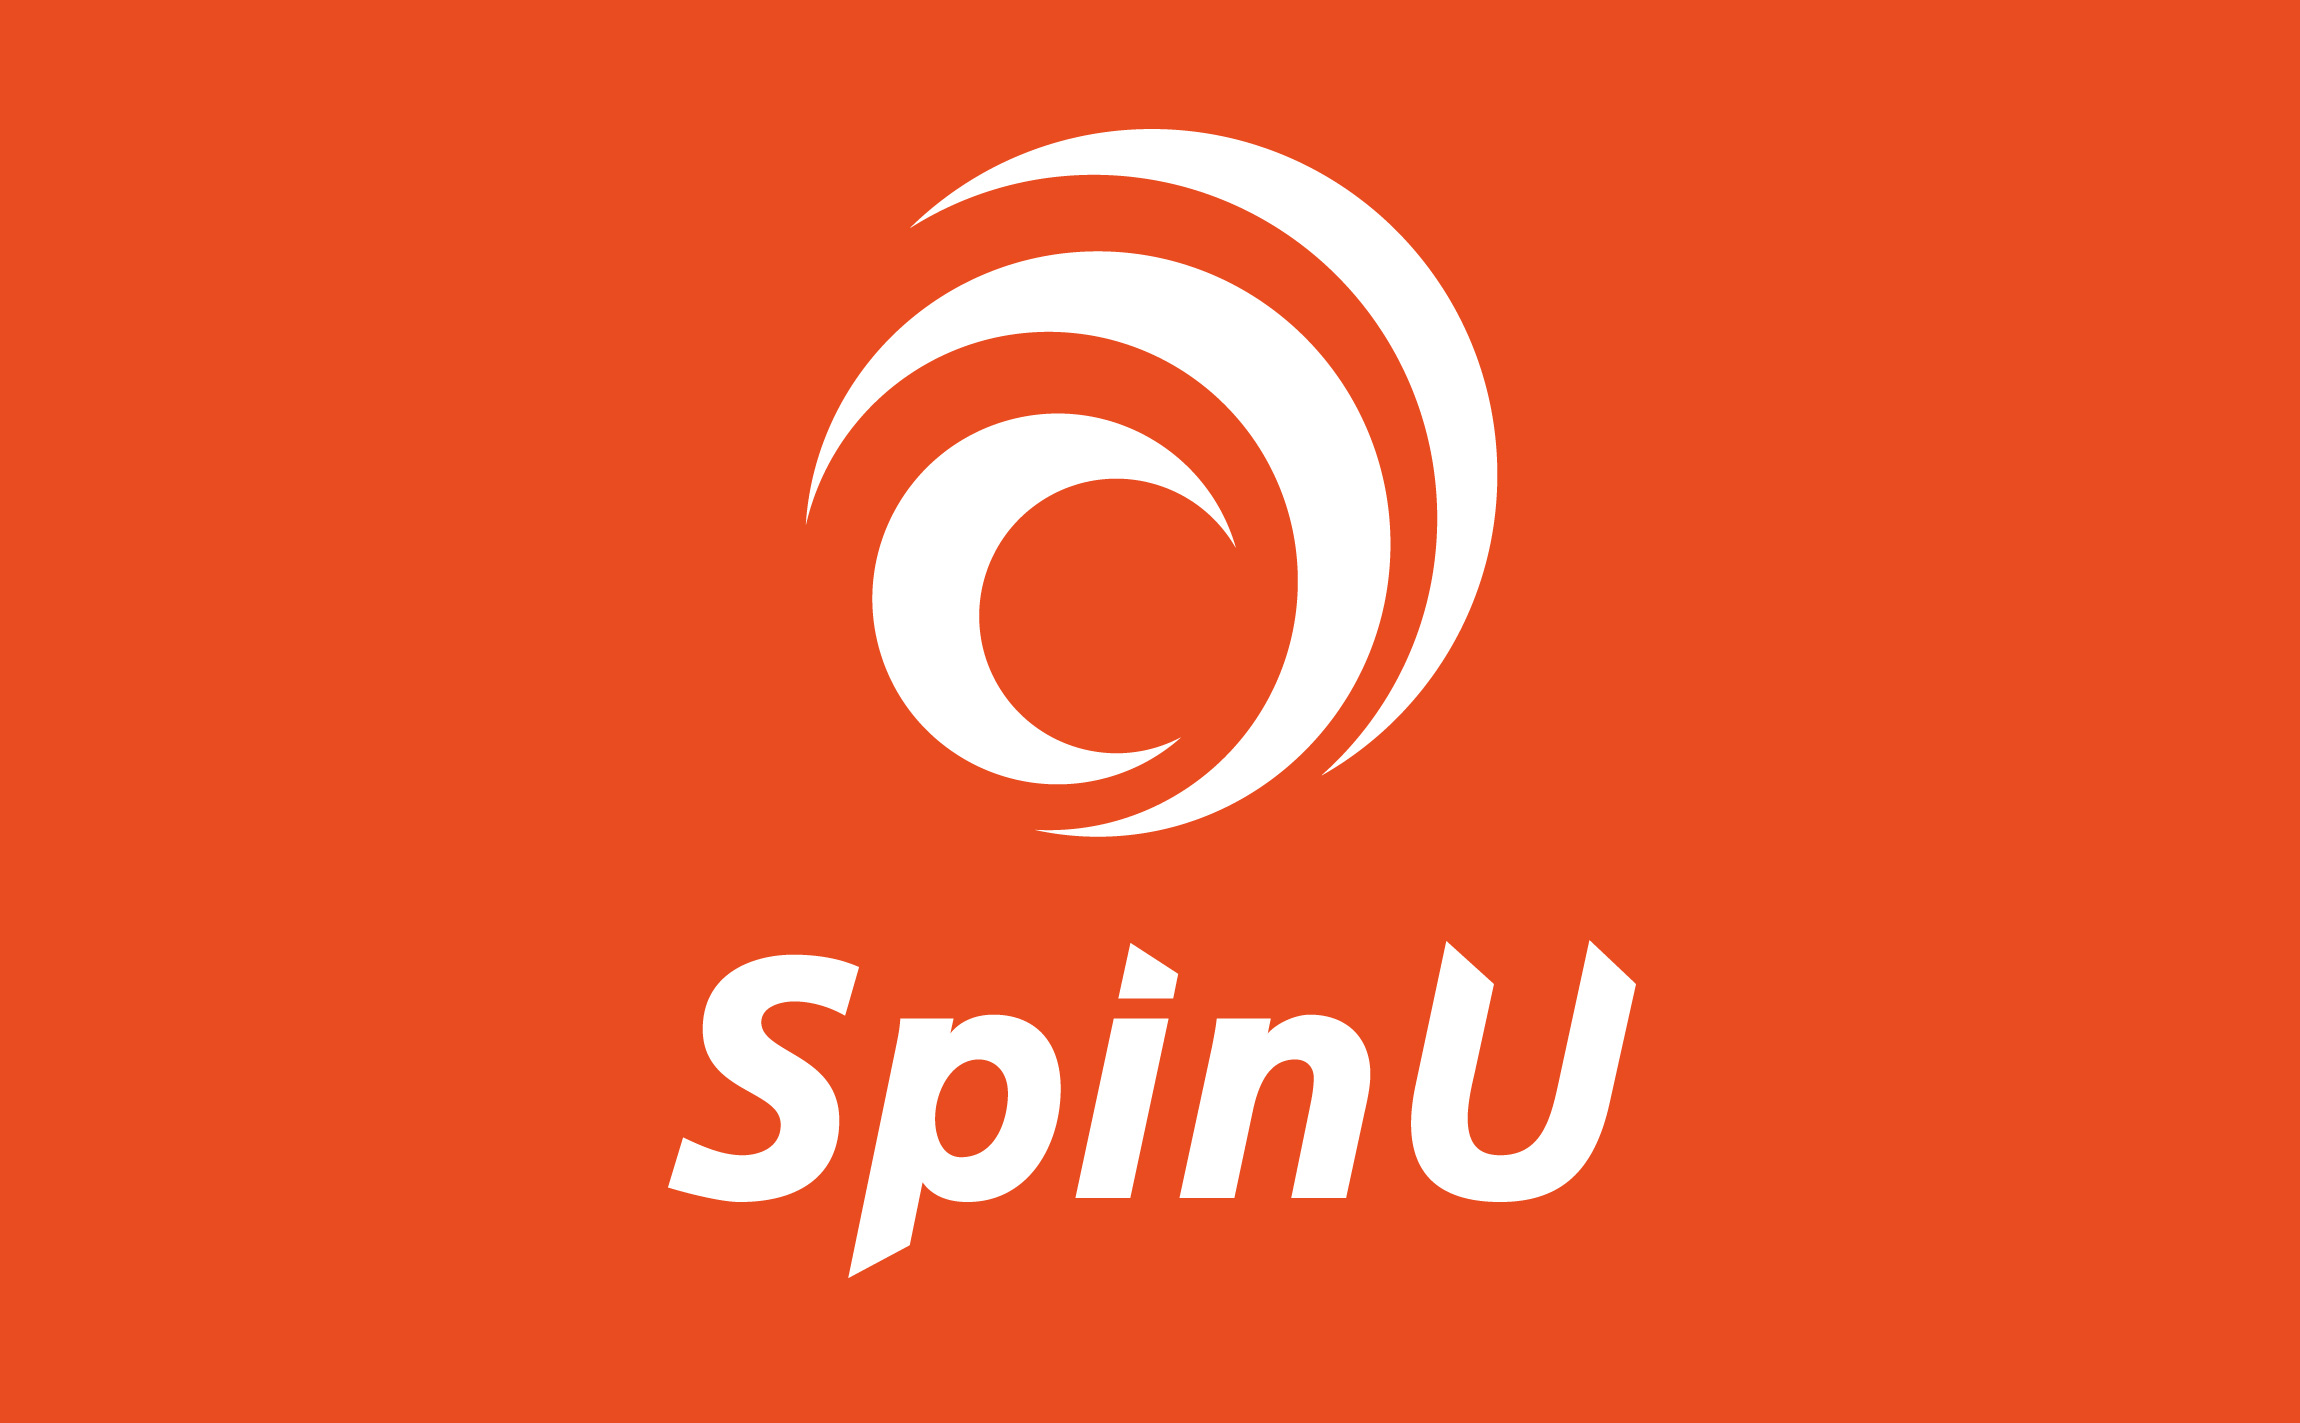 SpinU SpinU Branding & Identity